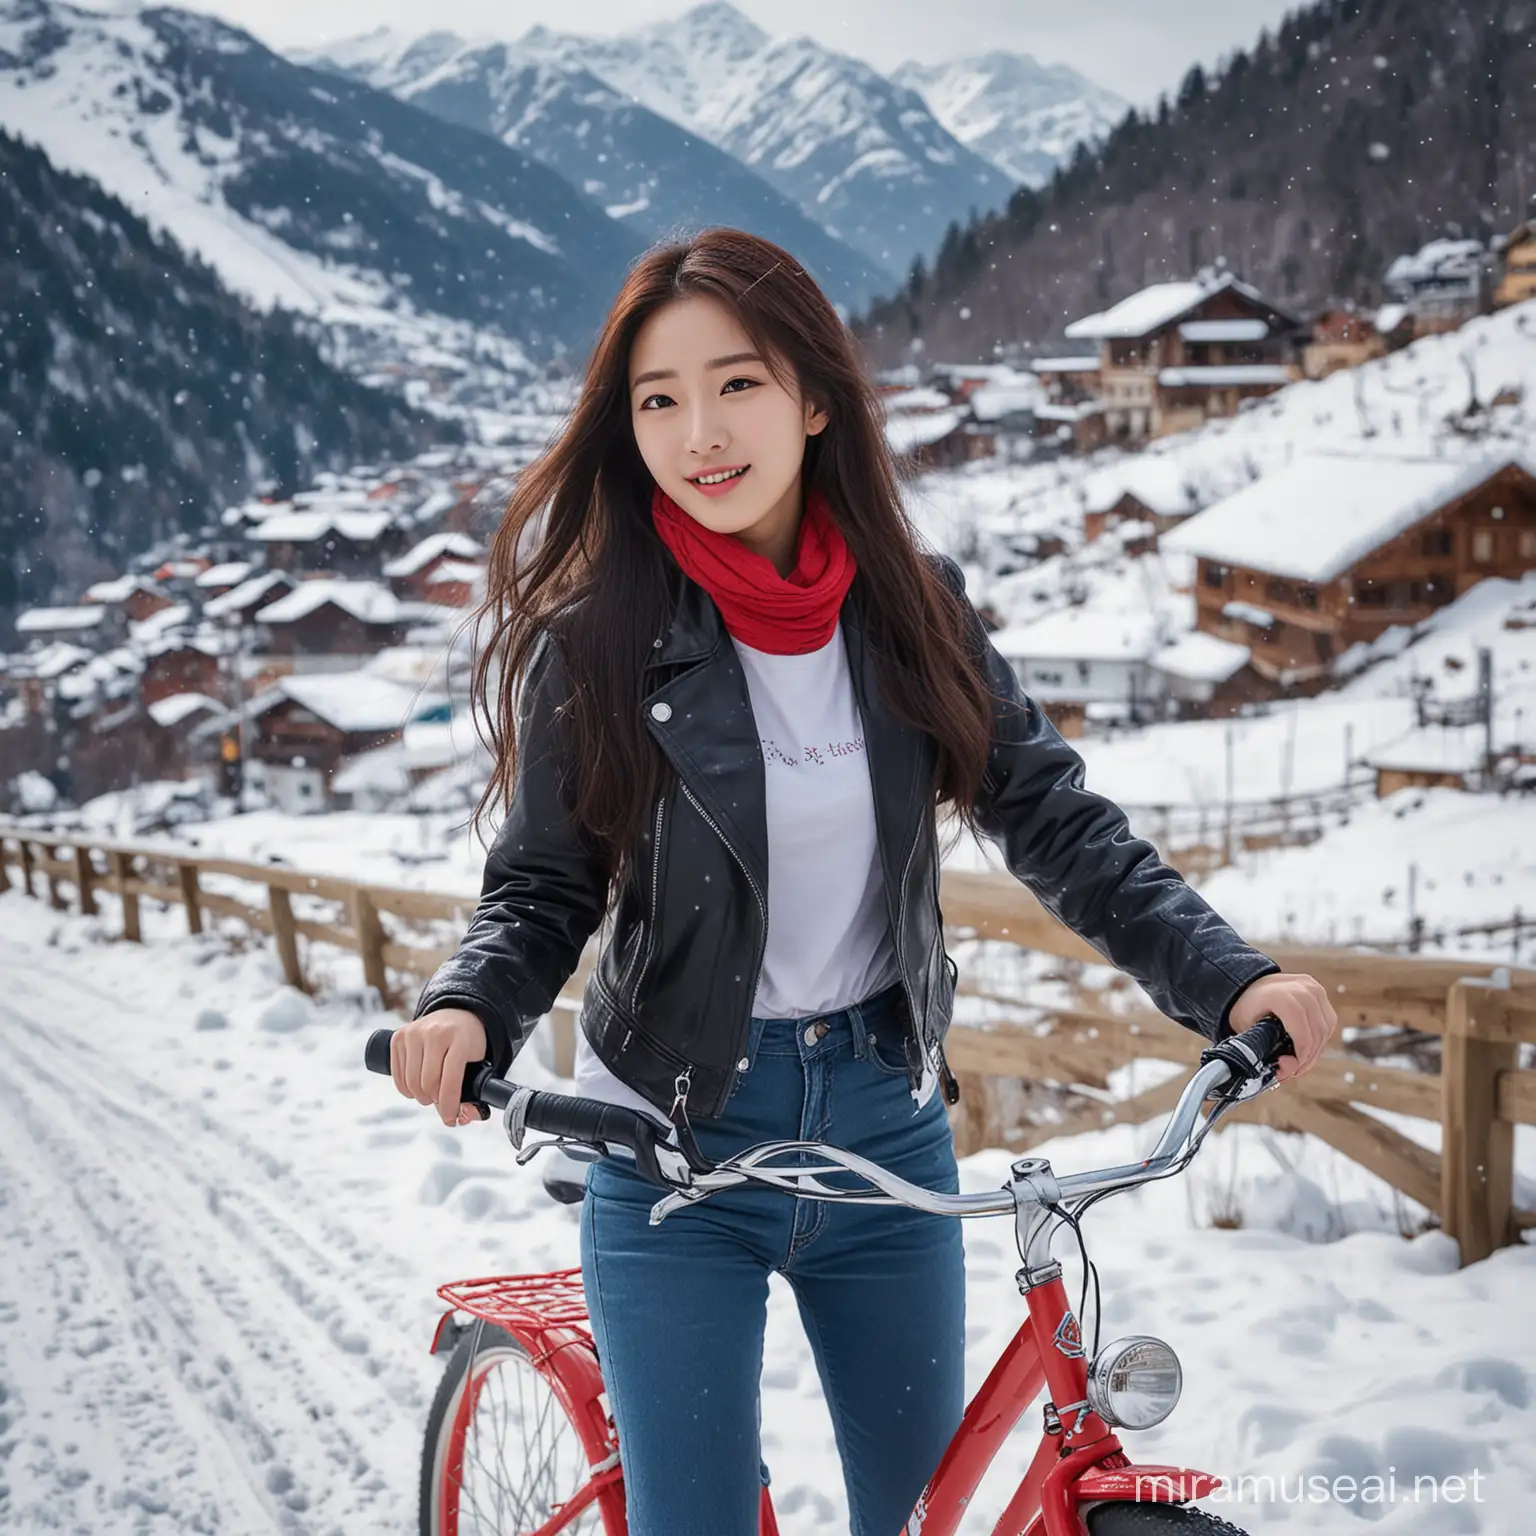 Gadis korea umur 20 tahun,jilbab biru,baju kaos dan jaket hitam,celana blue jean,wajah cantik,rambut panjang,sedang naik sepeda merah di pegunungan alpen yg bersalju di swiss,foto sempurna,super realistis,super berwarna